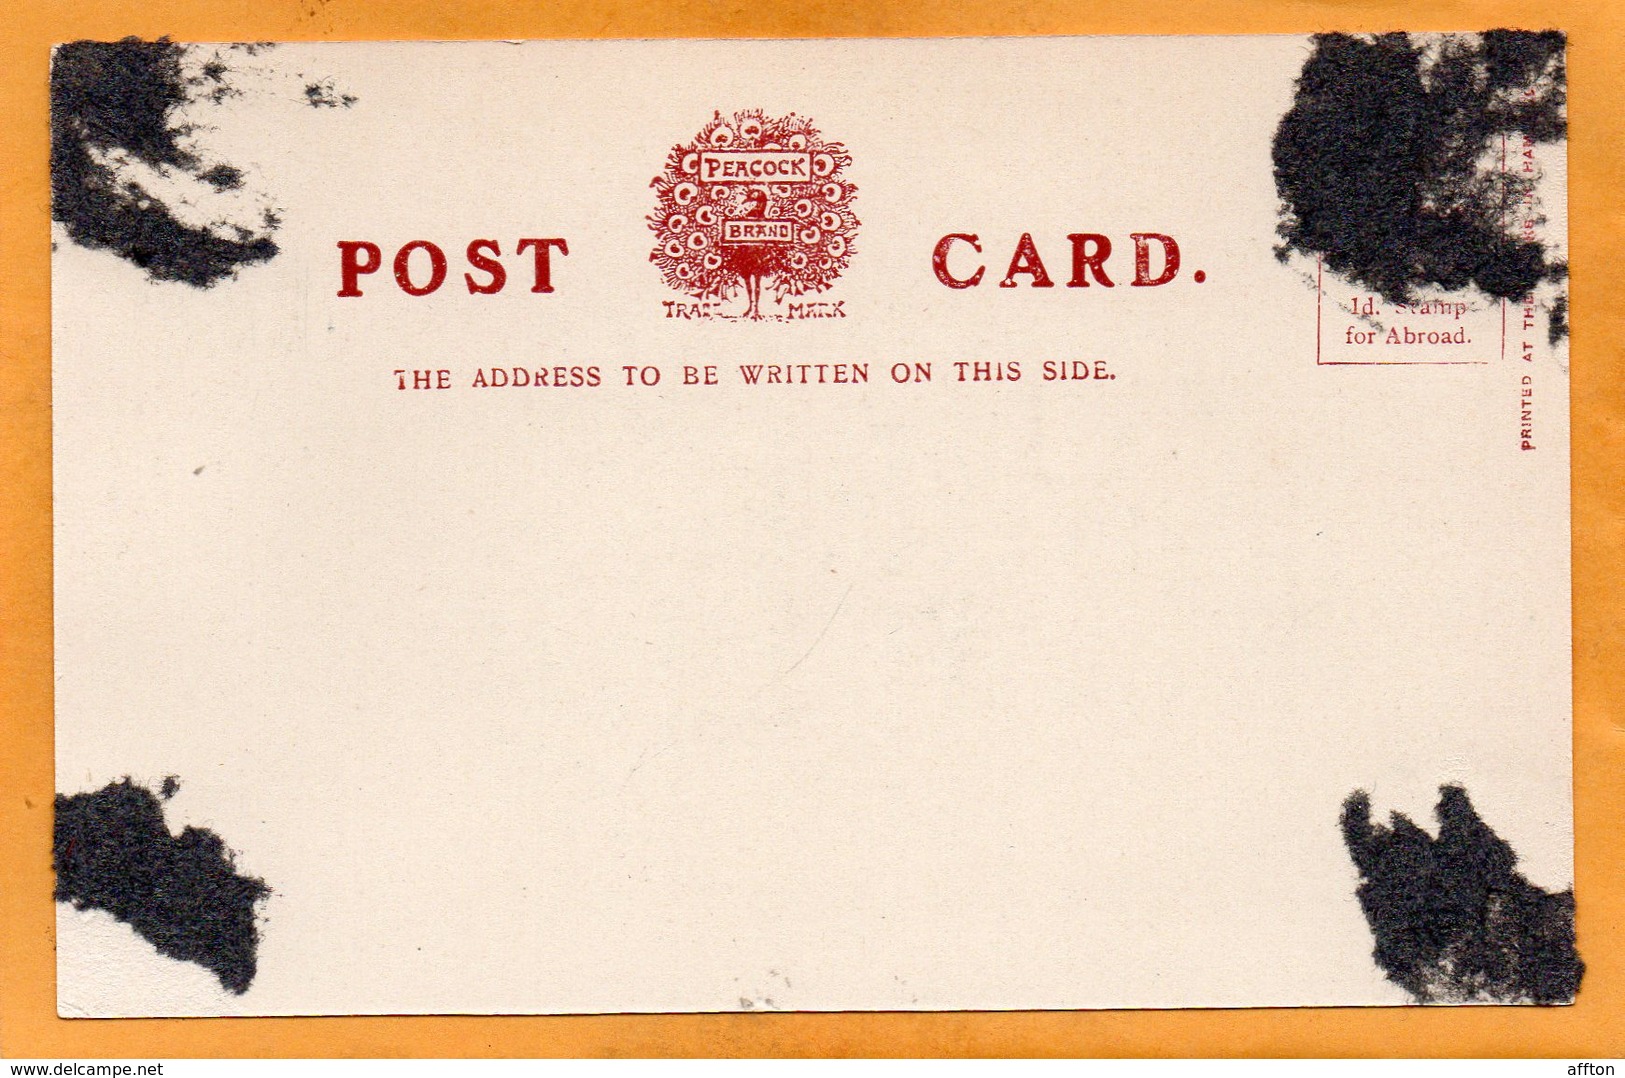 Lincoln UK 1900 Postcard - Lincoln